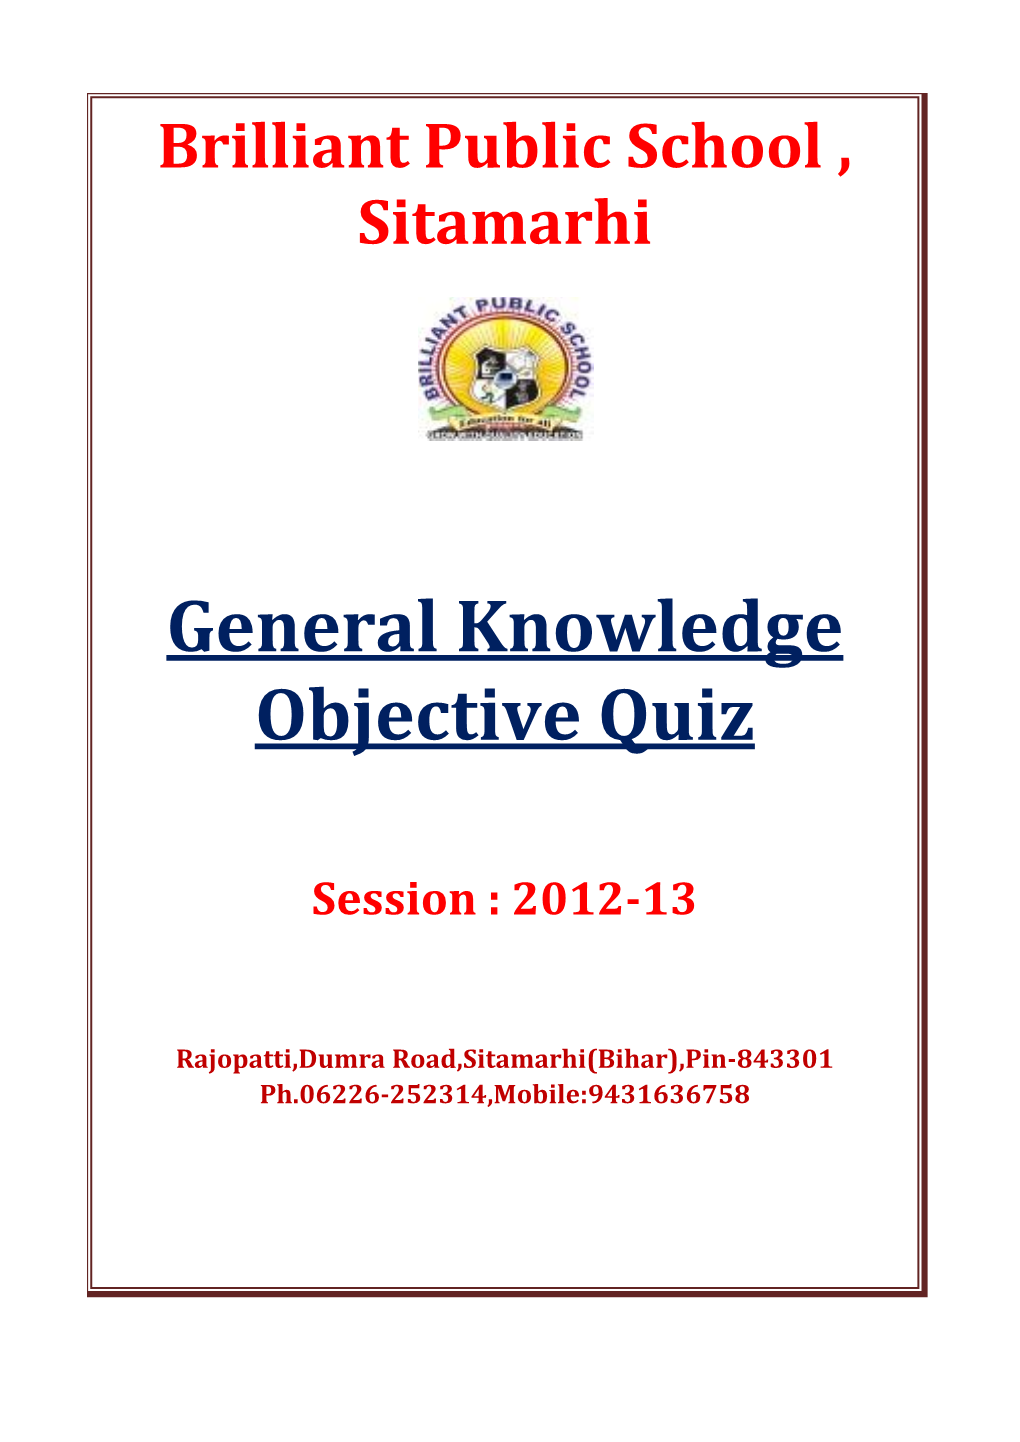 General Knowledge Objective Quiz